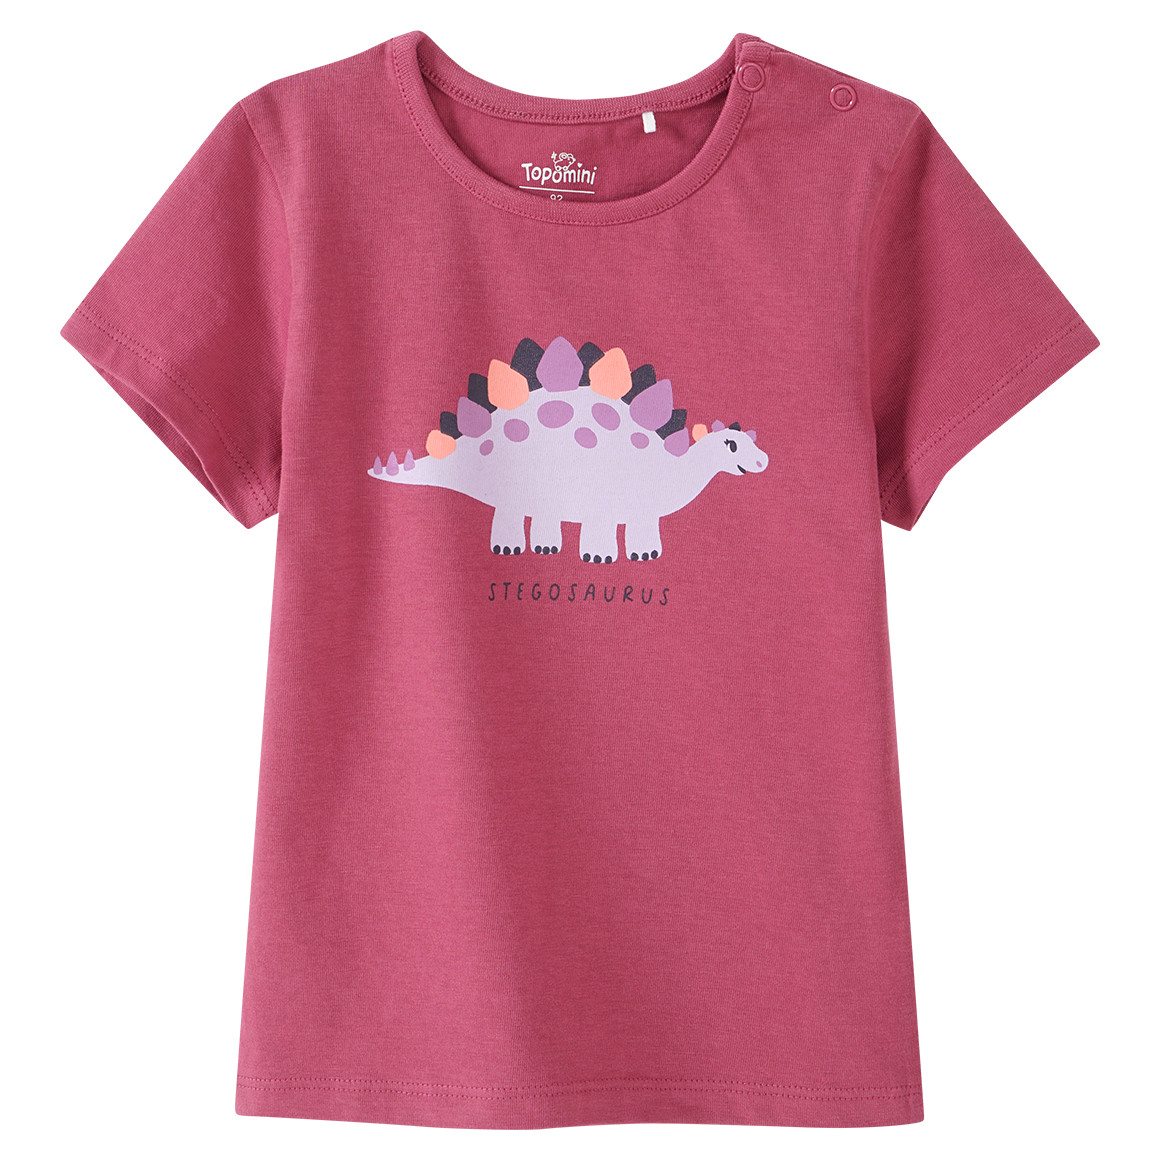 Baby T-Shirt mit Dino-Motiv von Topomini